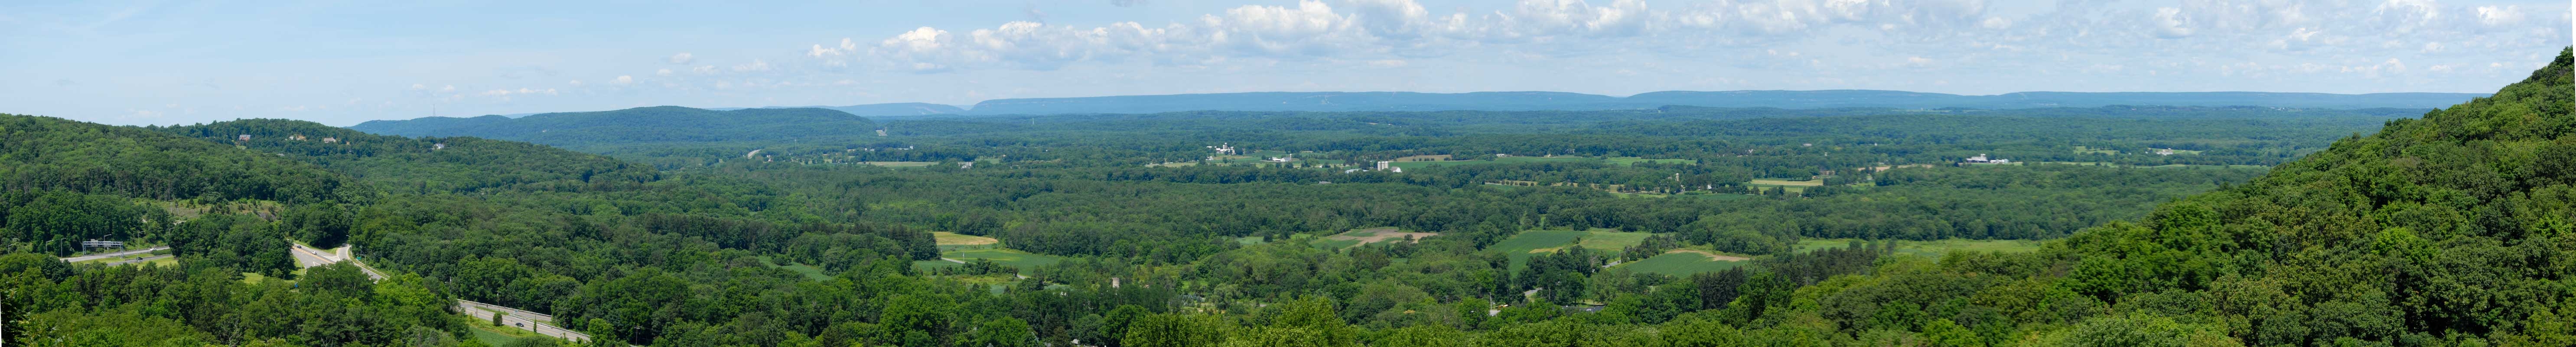 Panorama of Scenic Overlook in Eastern Pennsylvania